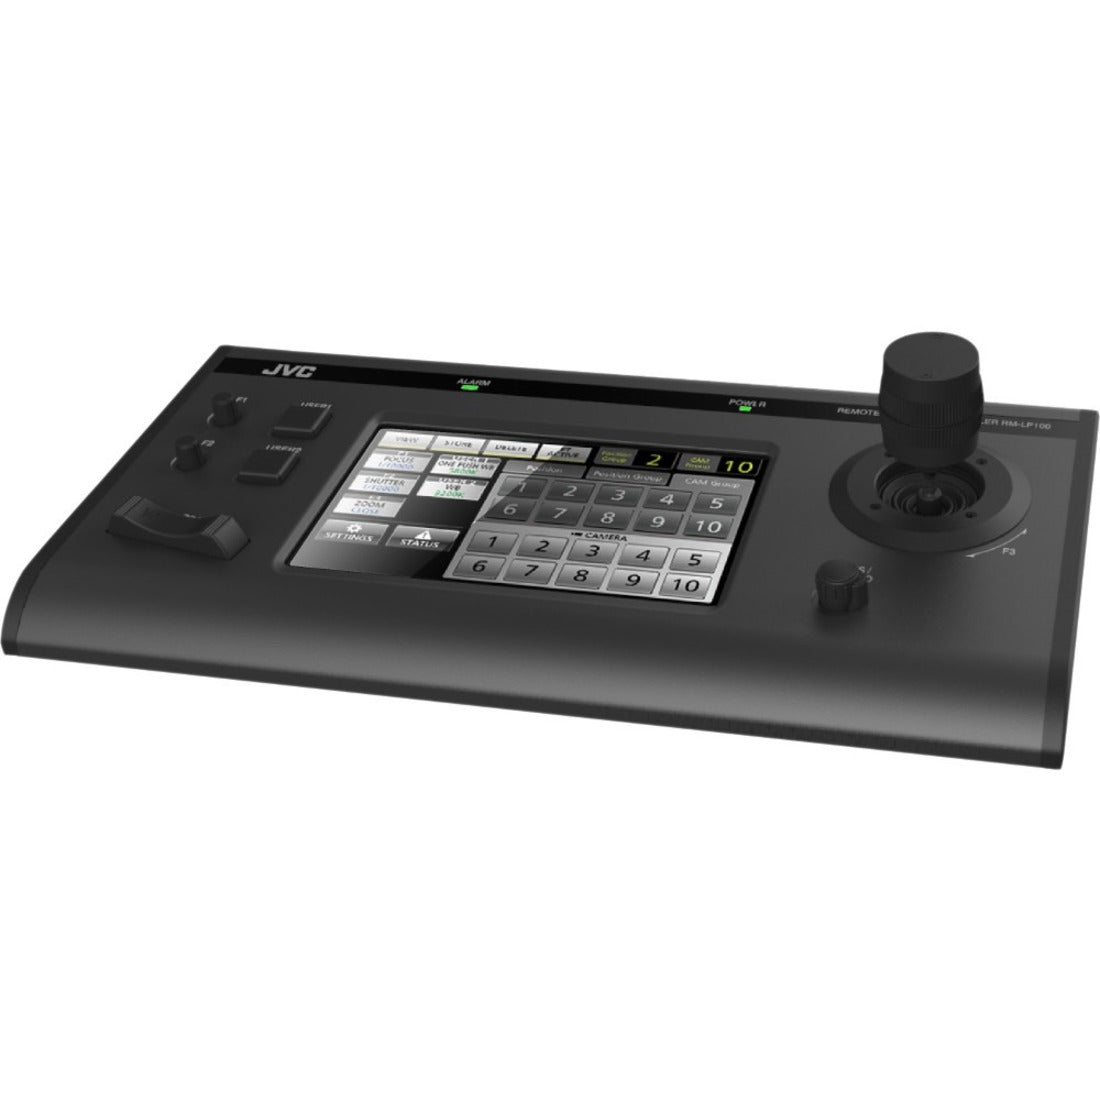 JVC RM-LP100U Remote Camera Controller, 7" Touchscreen, White Balance, Iris Control, Dialer